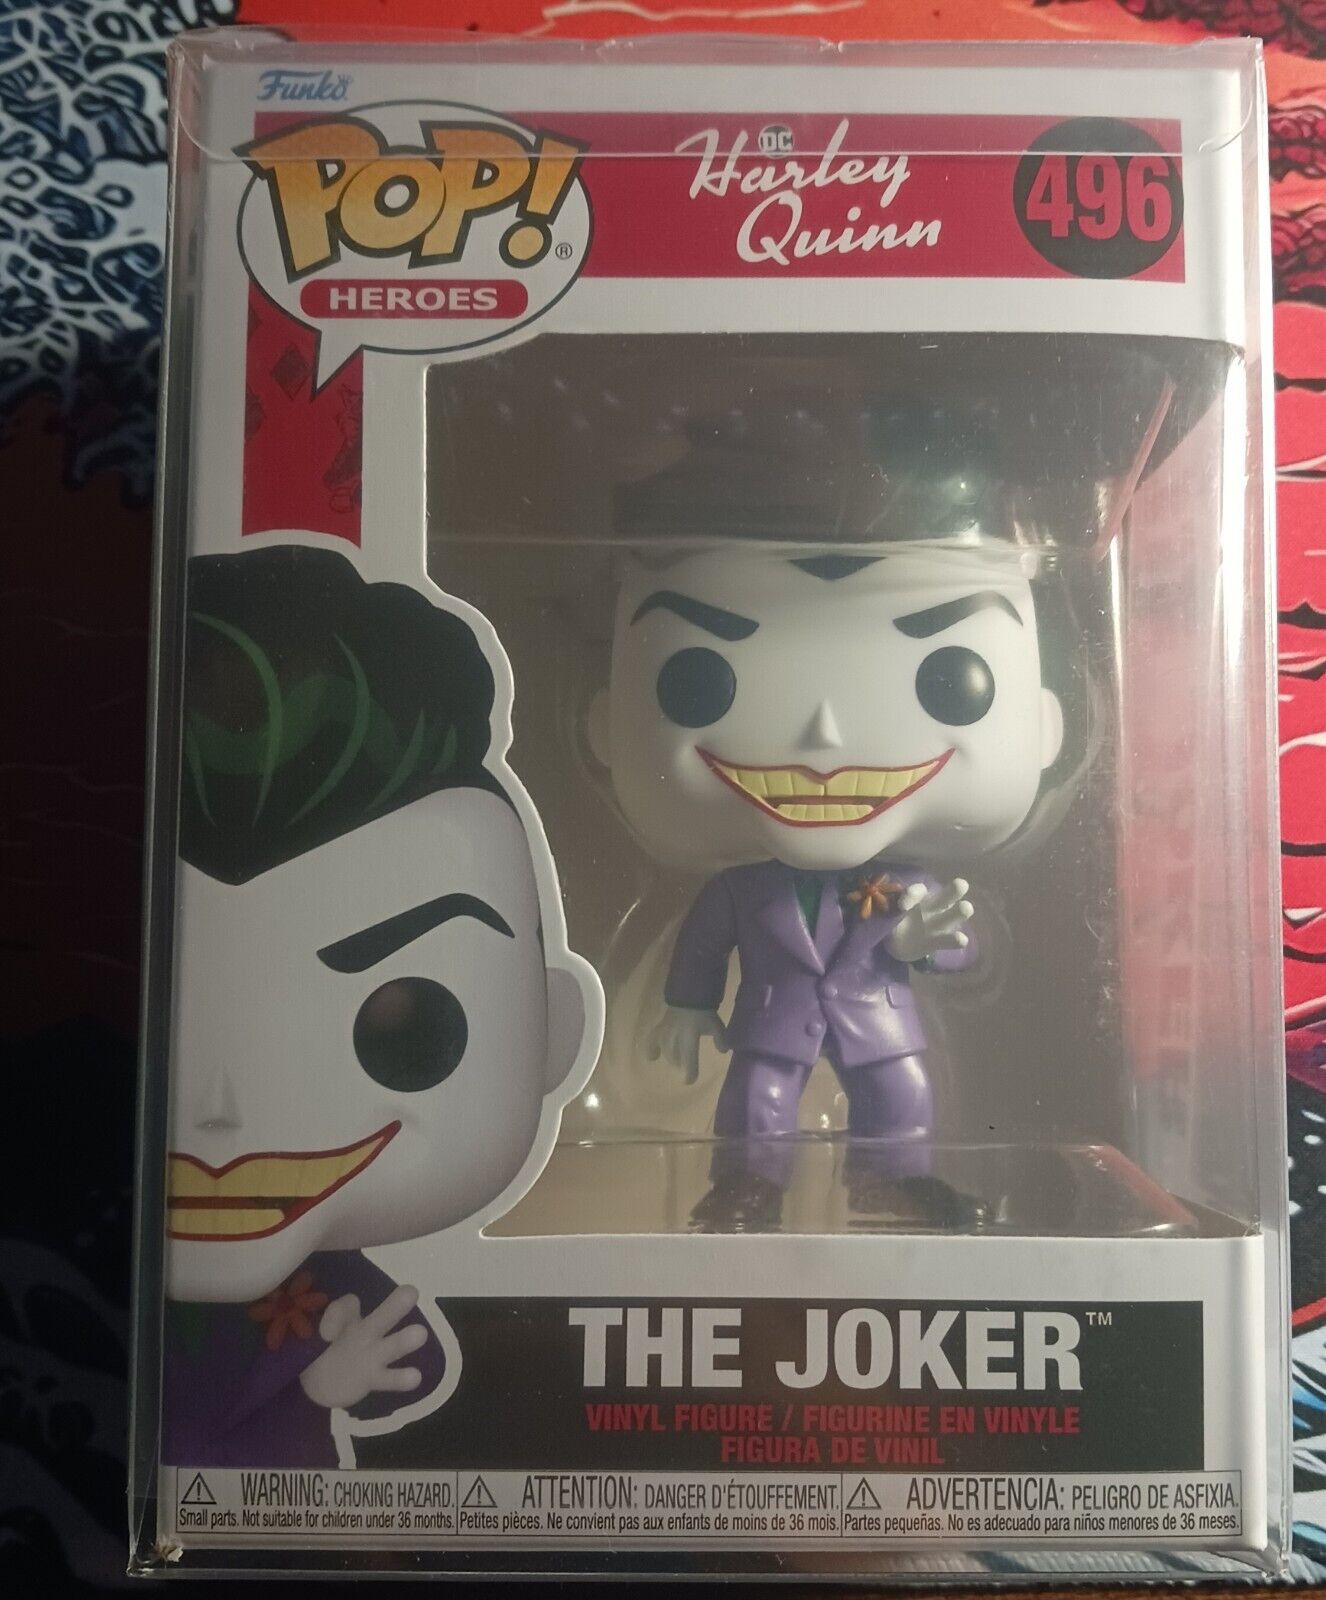 Harley Quinn Animated Series The Joker Funko Pop Vinyl Figure #496